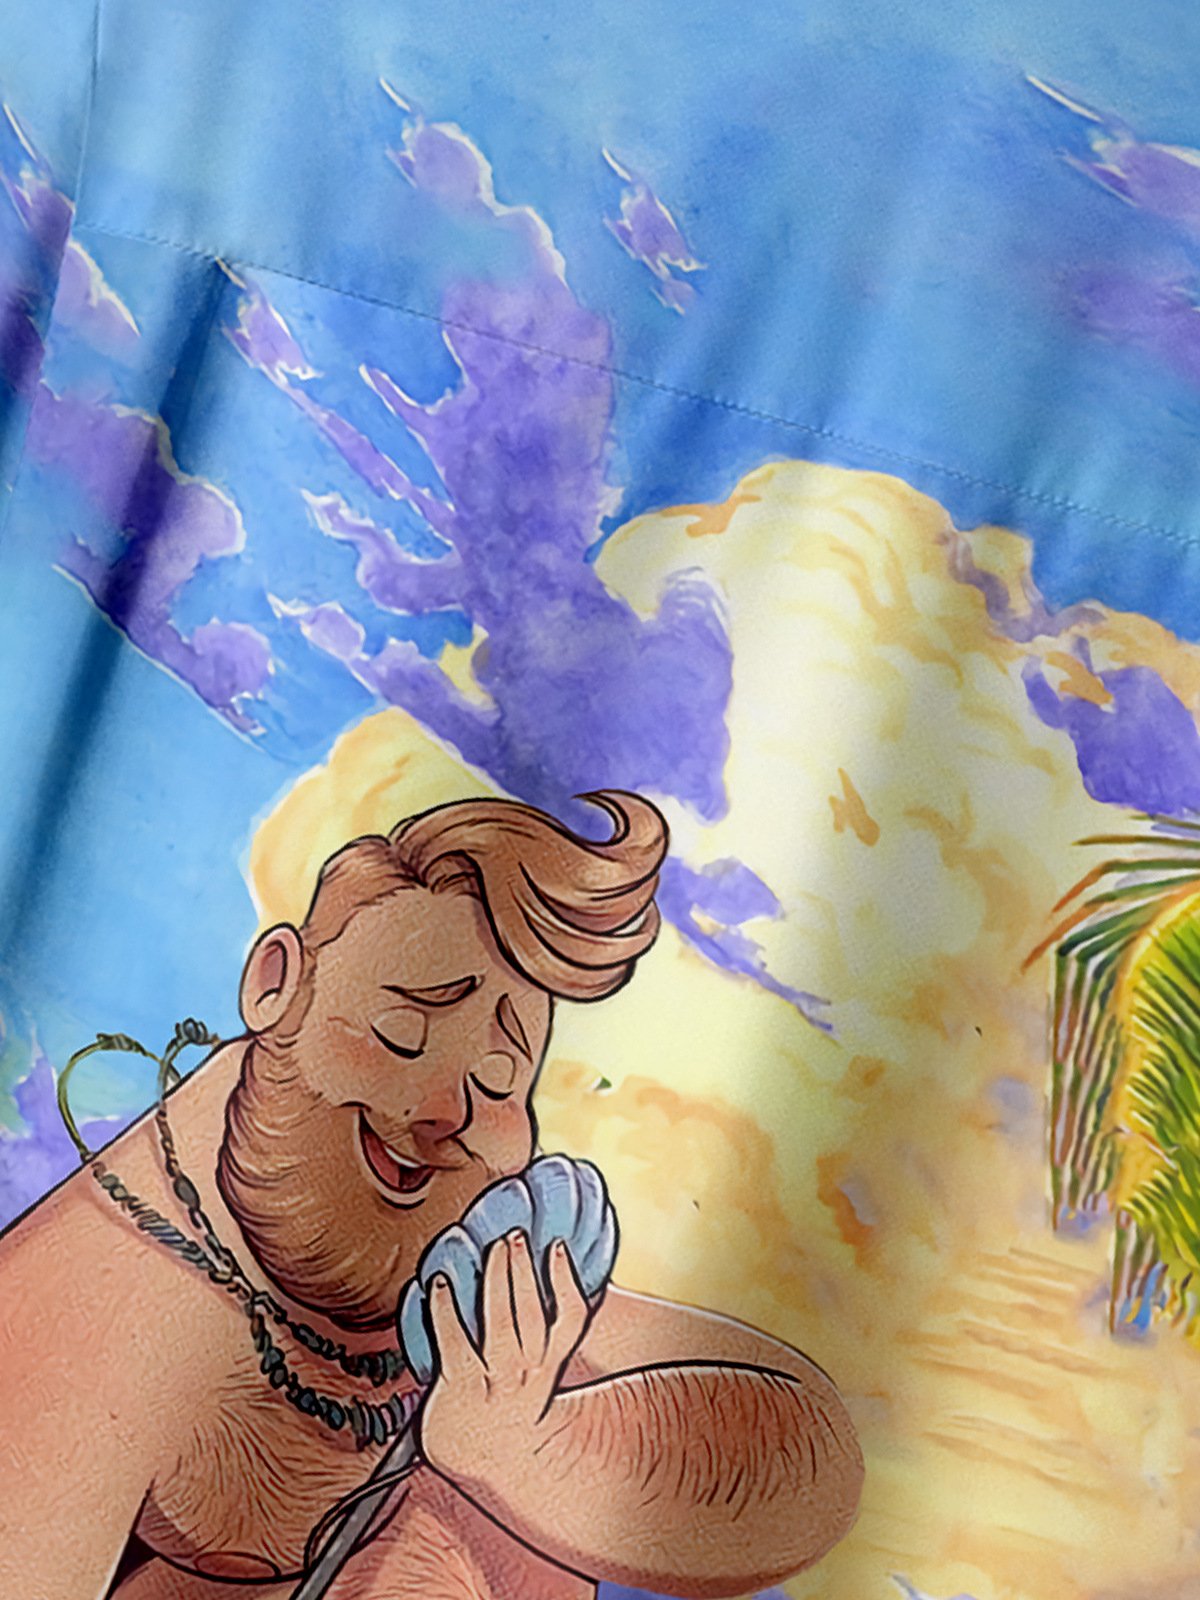 Mermaid Coconut Tree Chest Pocket Short Sleeve Hawaiian Shirt